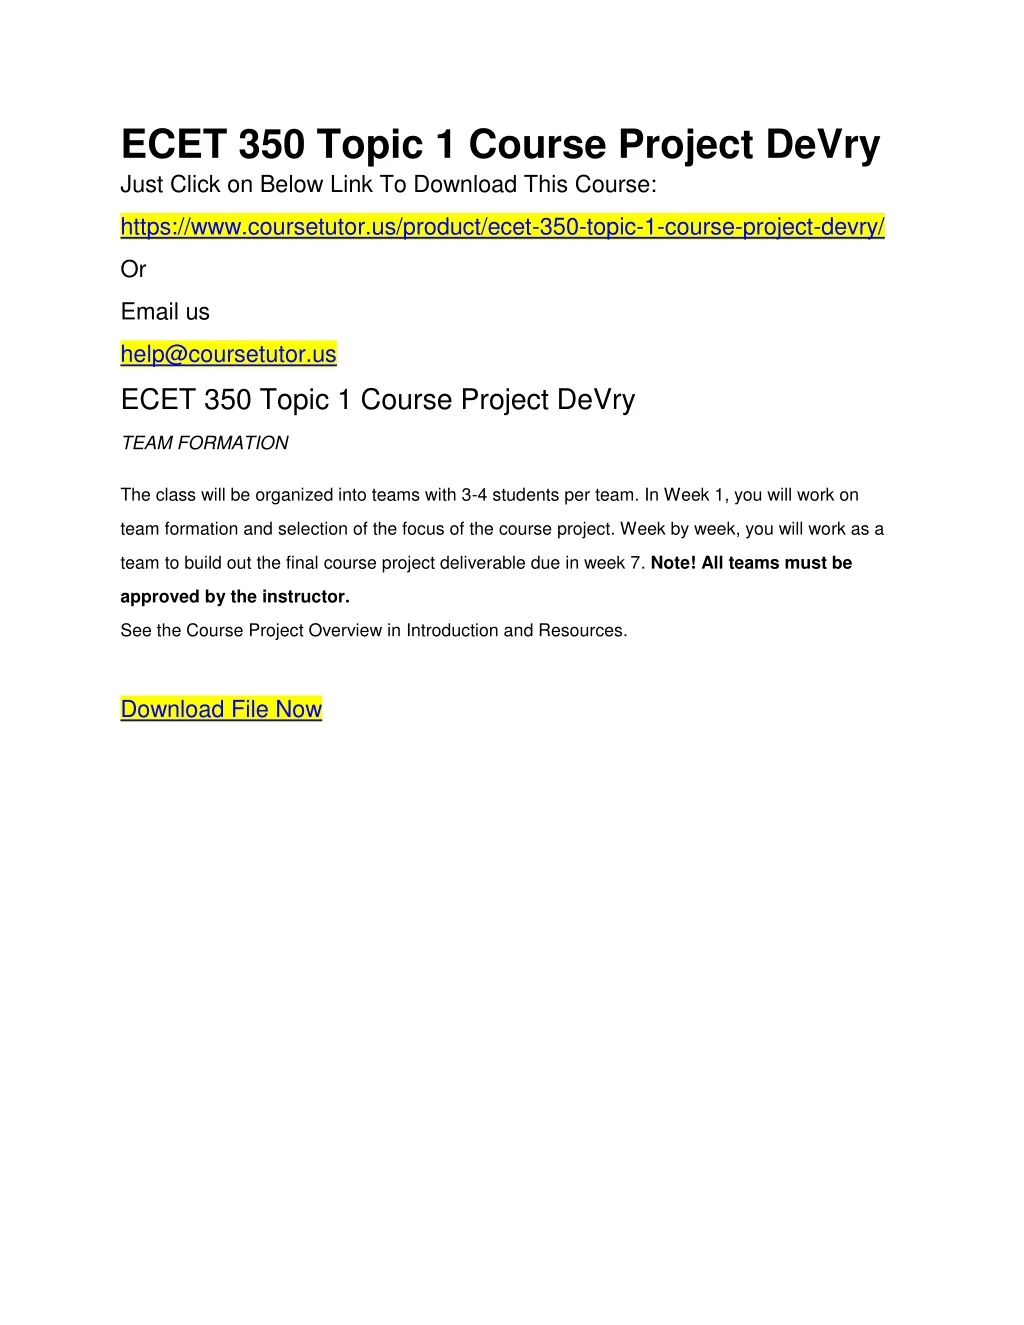 ecet 350 topic 1 course project devry just click